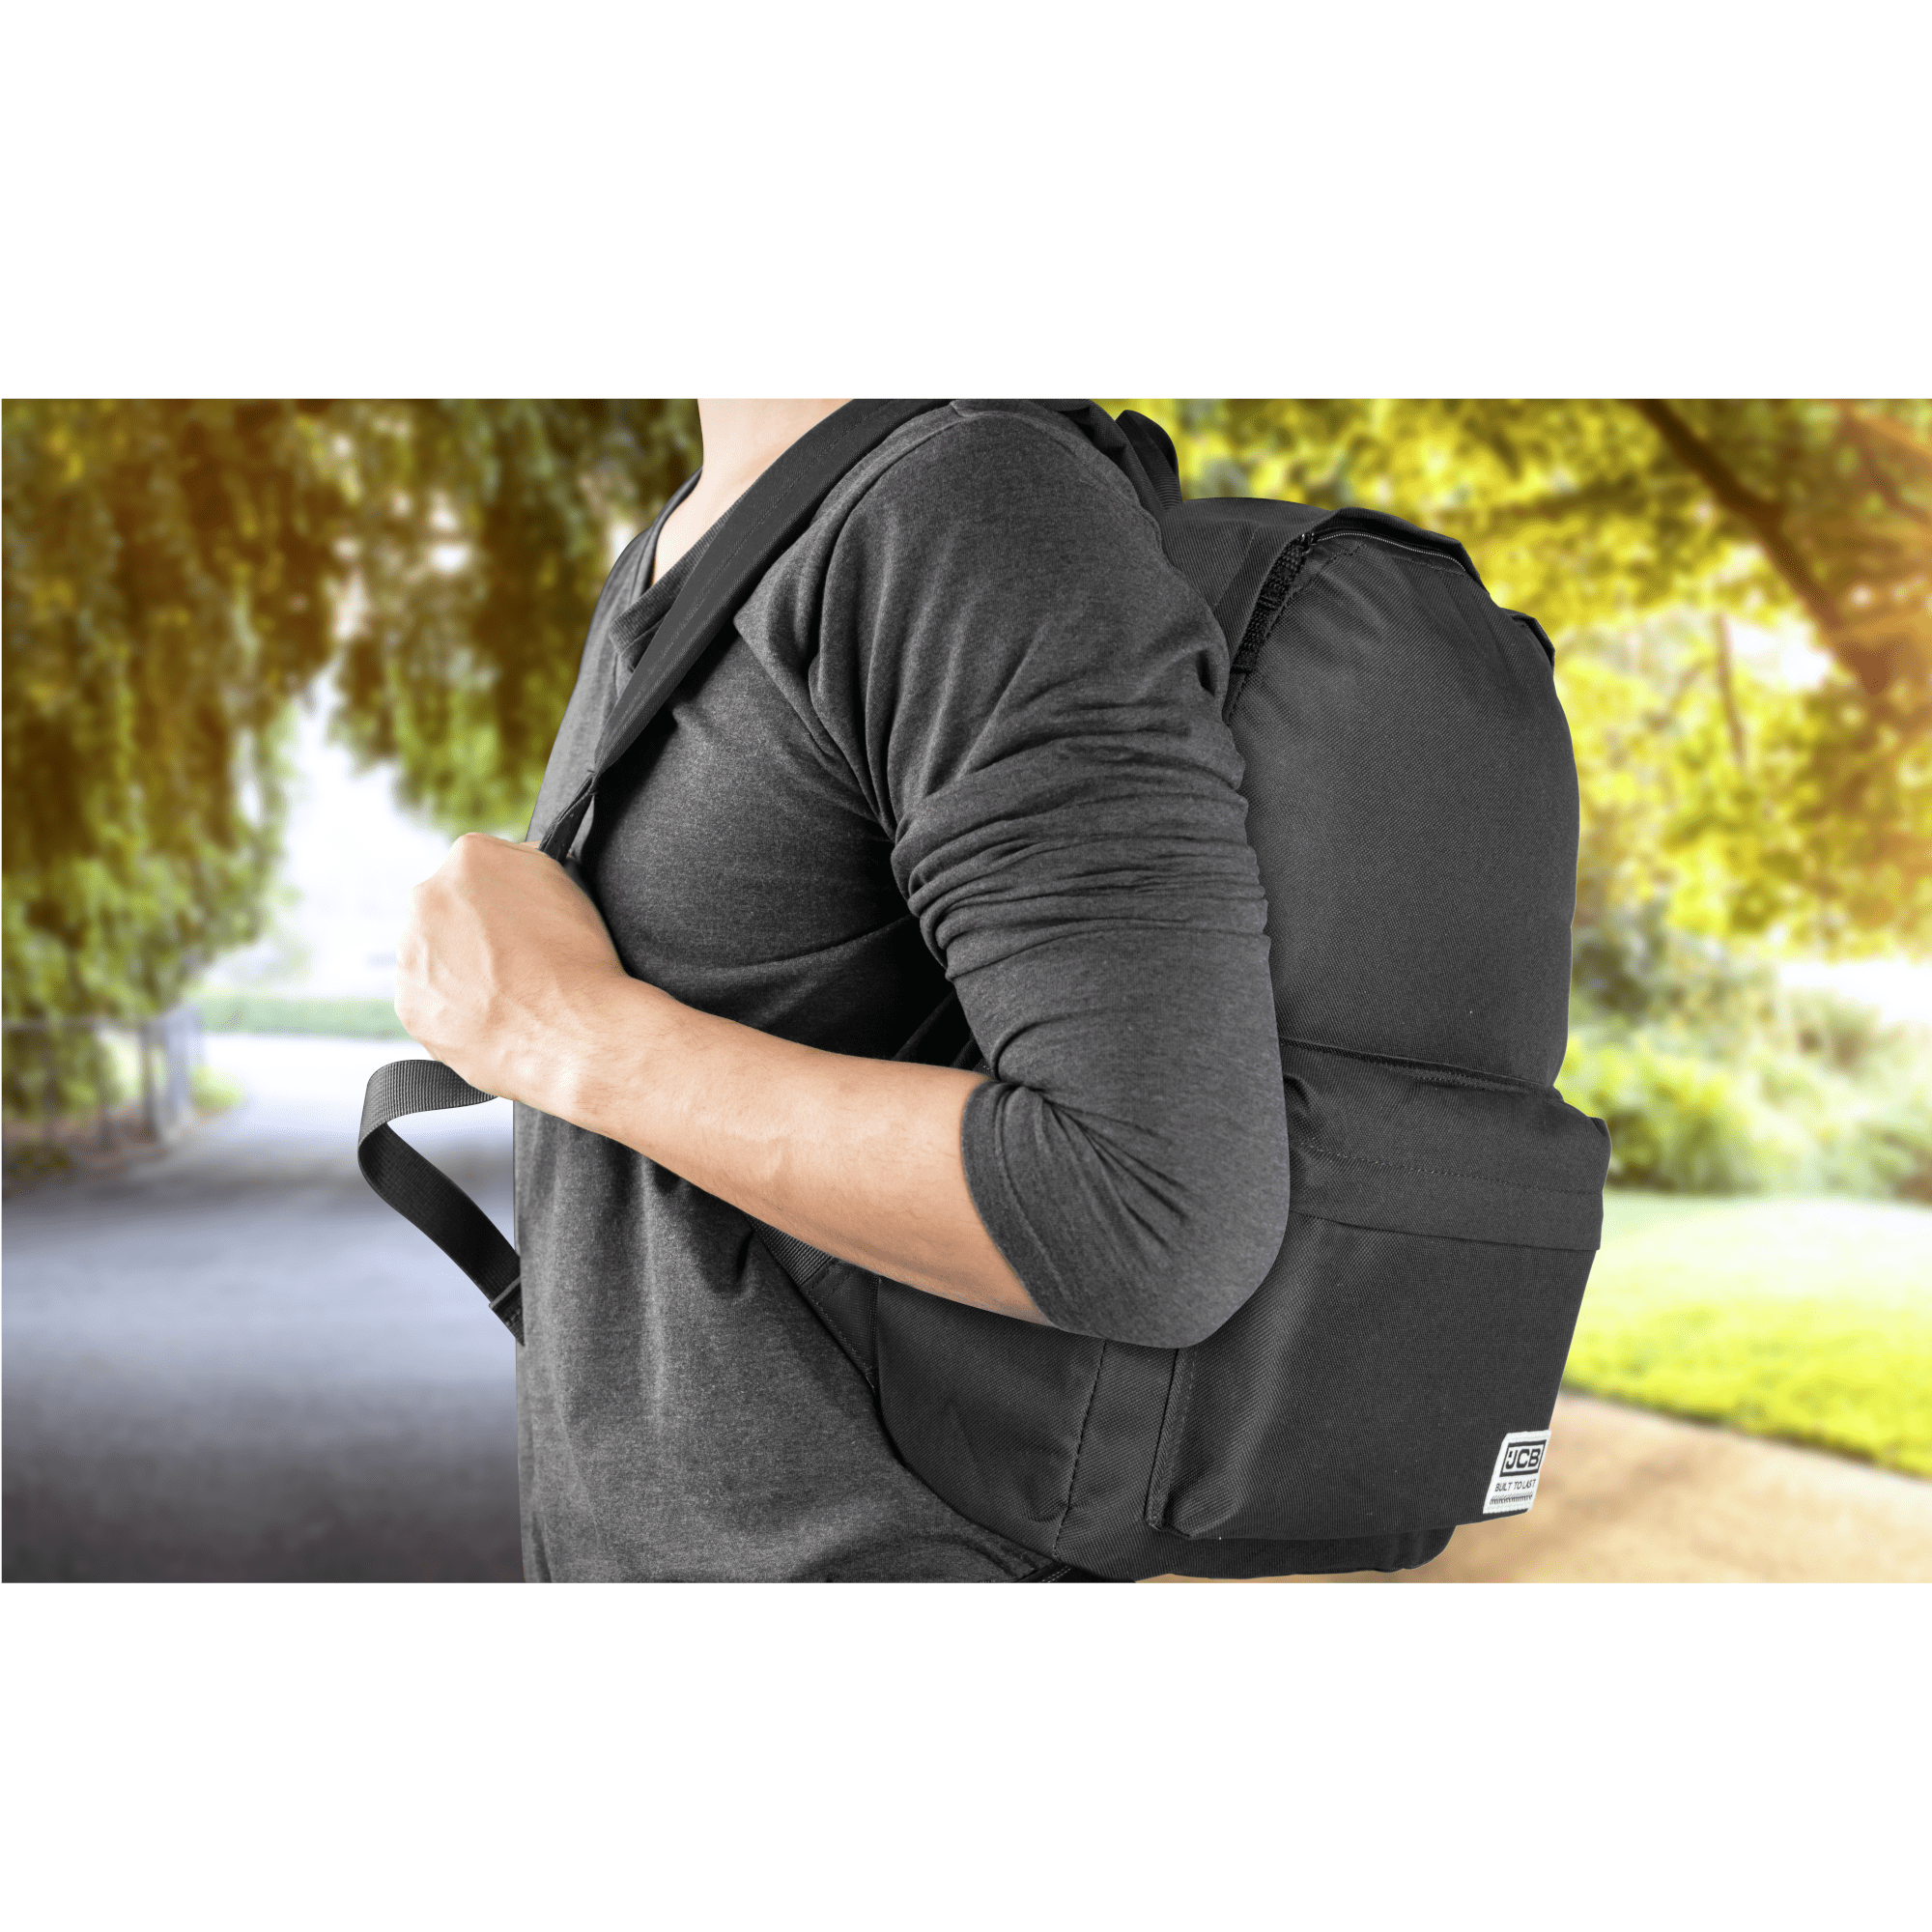 Backpack for School, Work or Travel (Black) - JCB - DSL